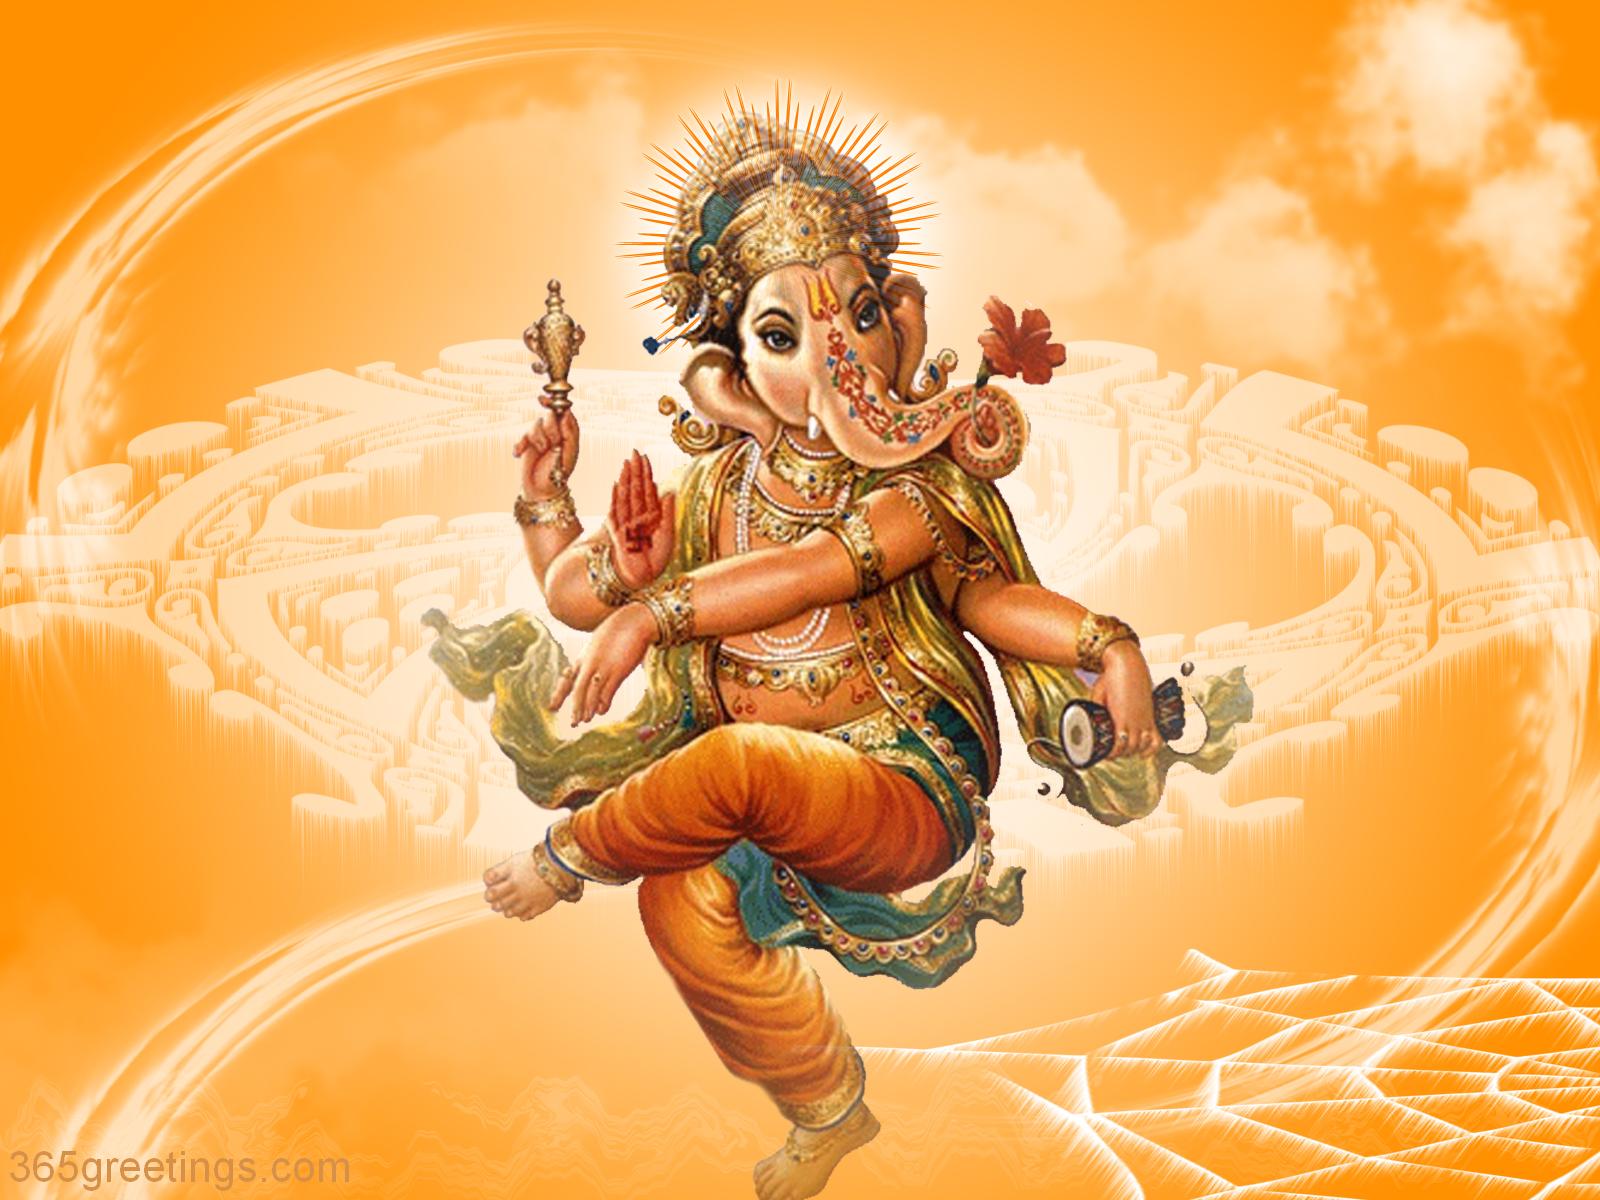 Hindu God Wallpaper Hd Free Download - HD Wallpapers and ...